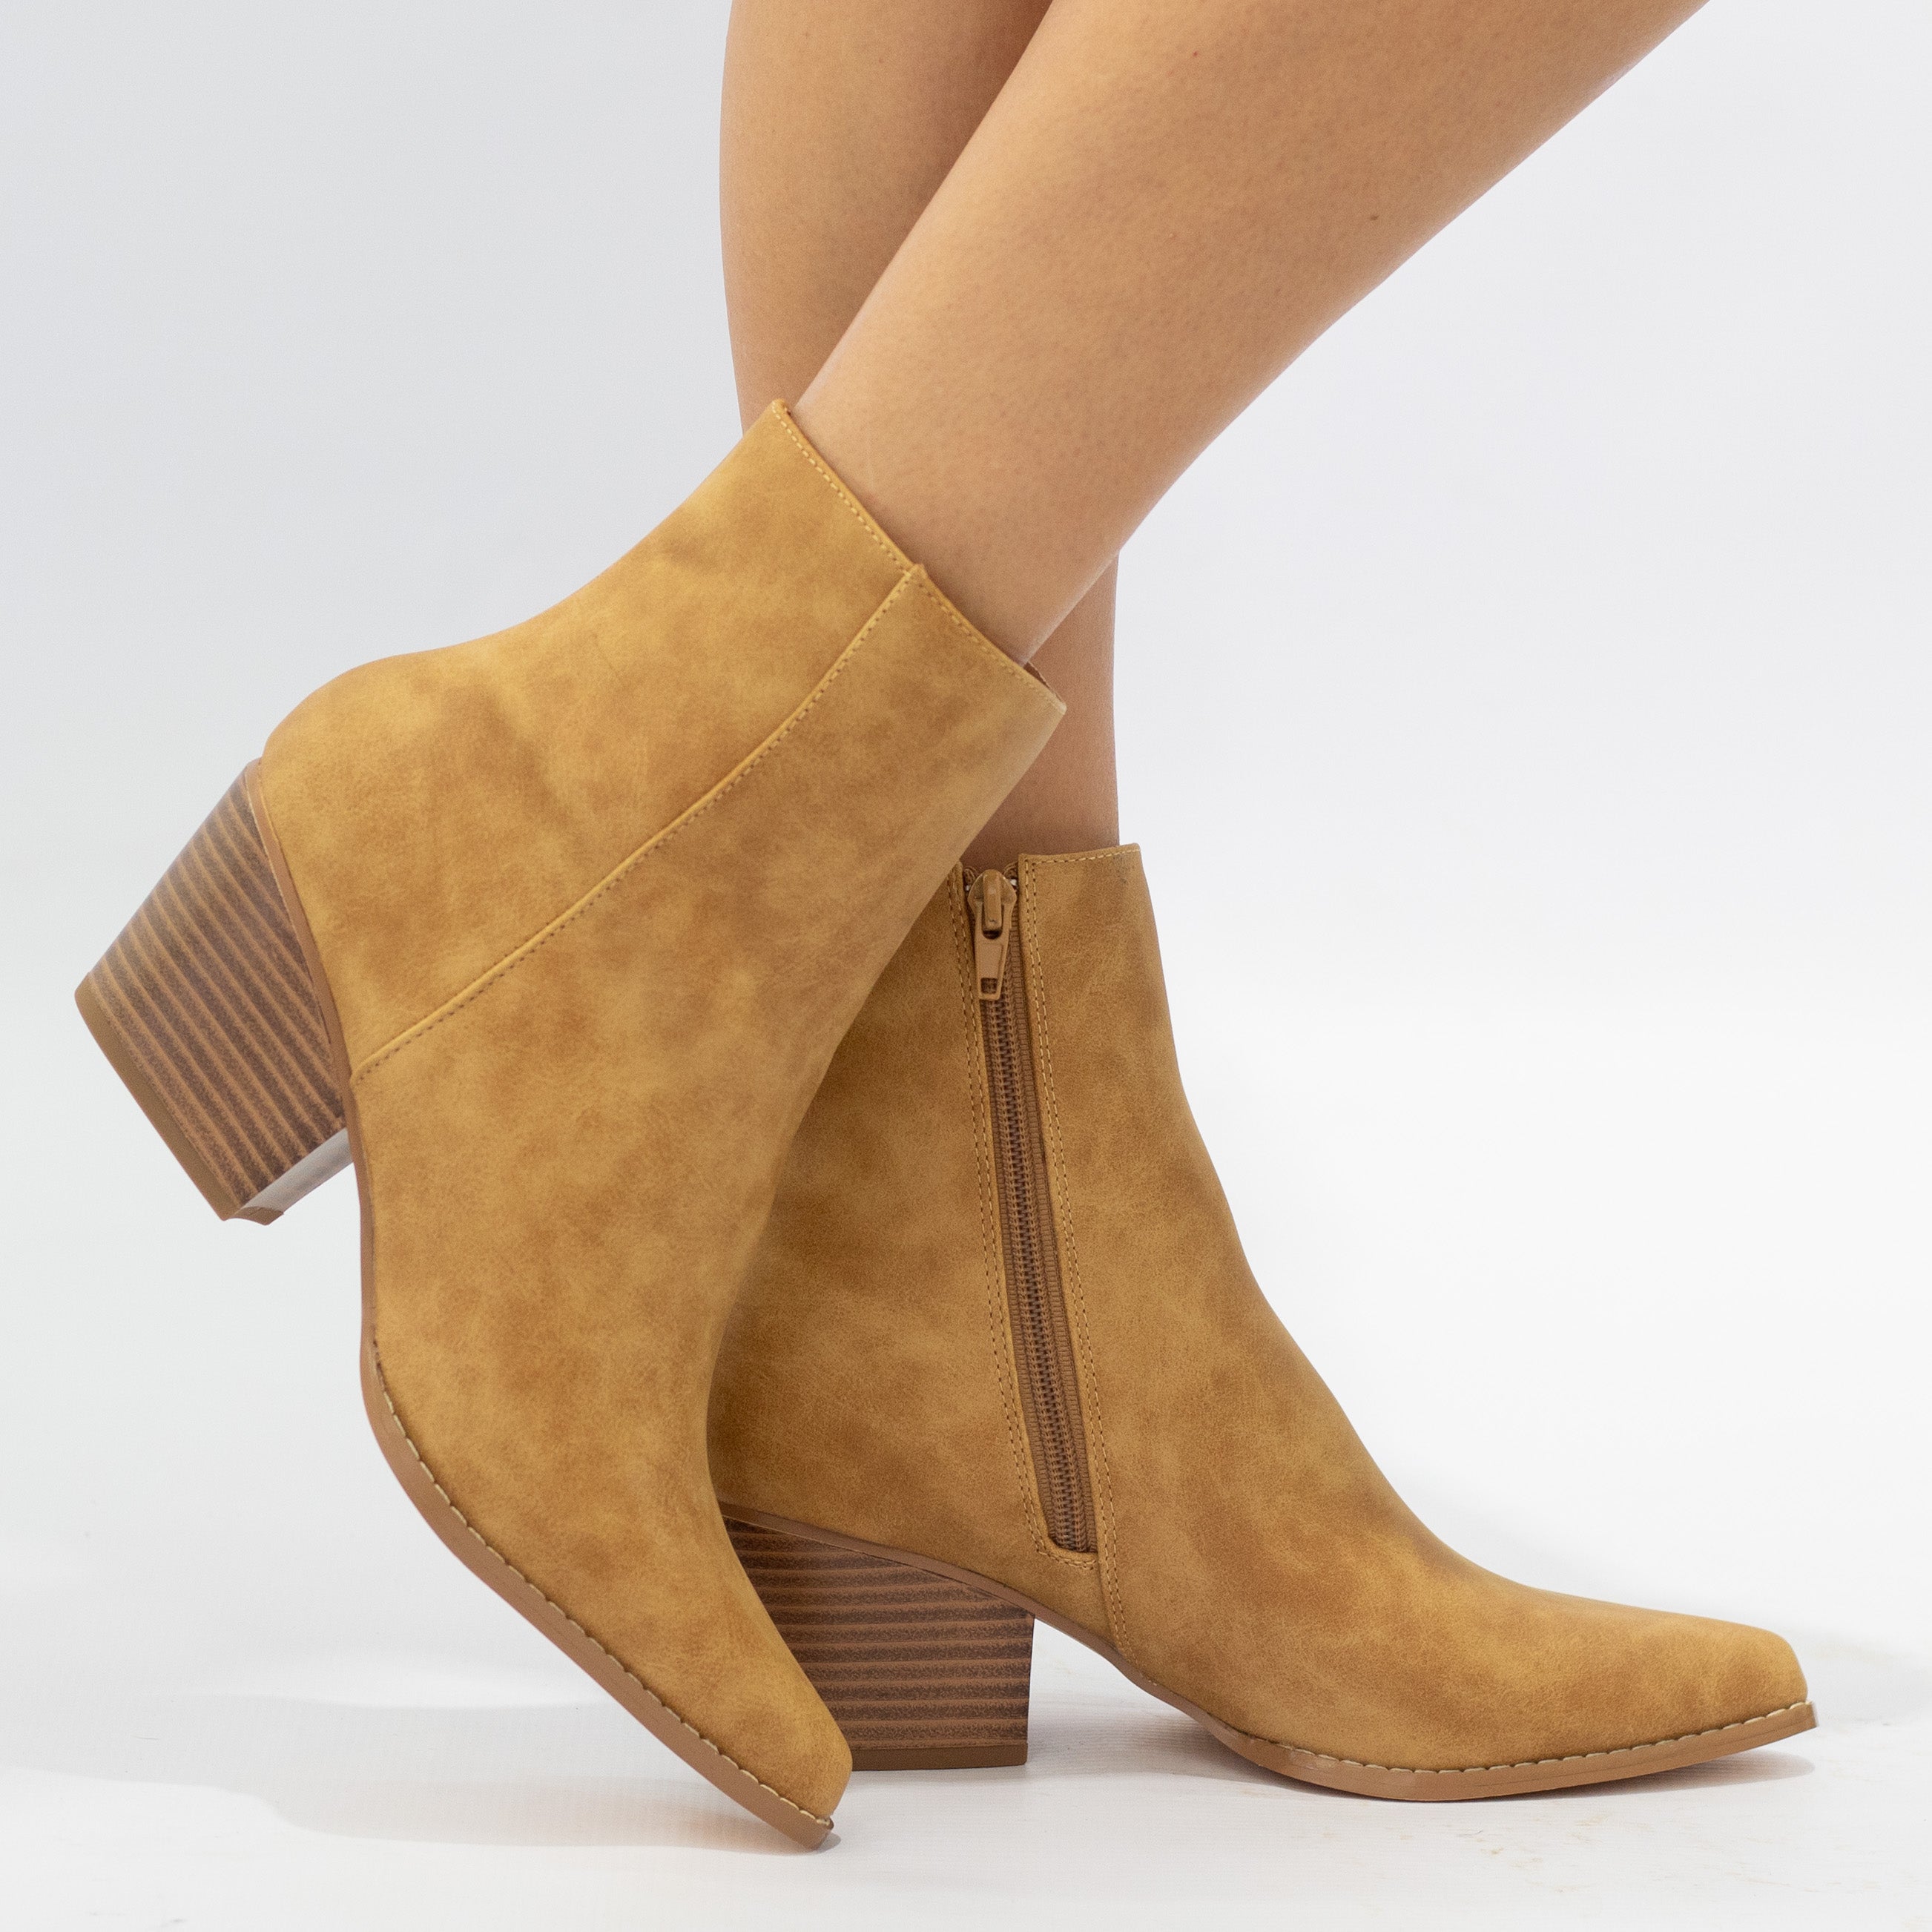 Noelle 6cm block heel LA08-18 NUBUCK ankle boot camel